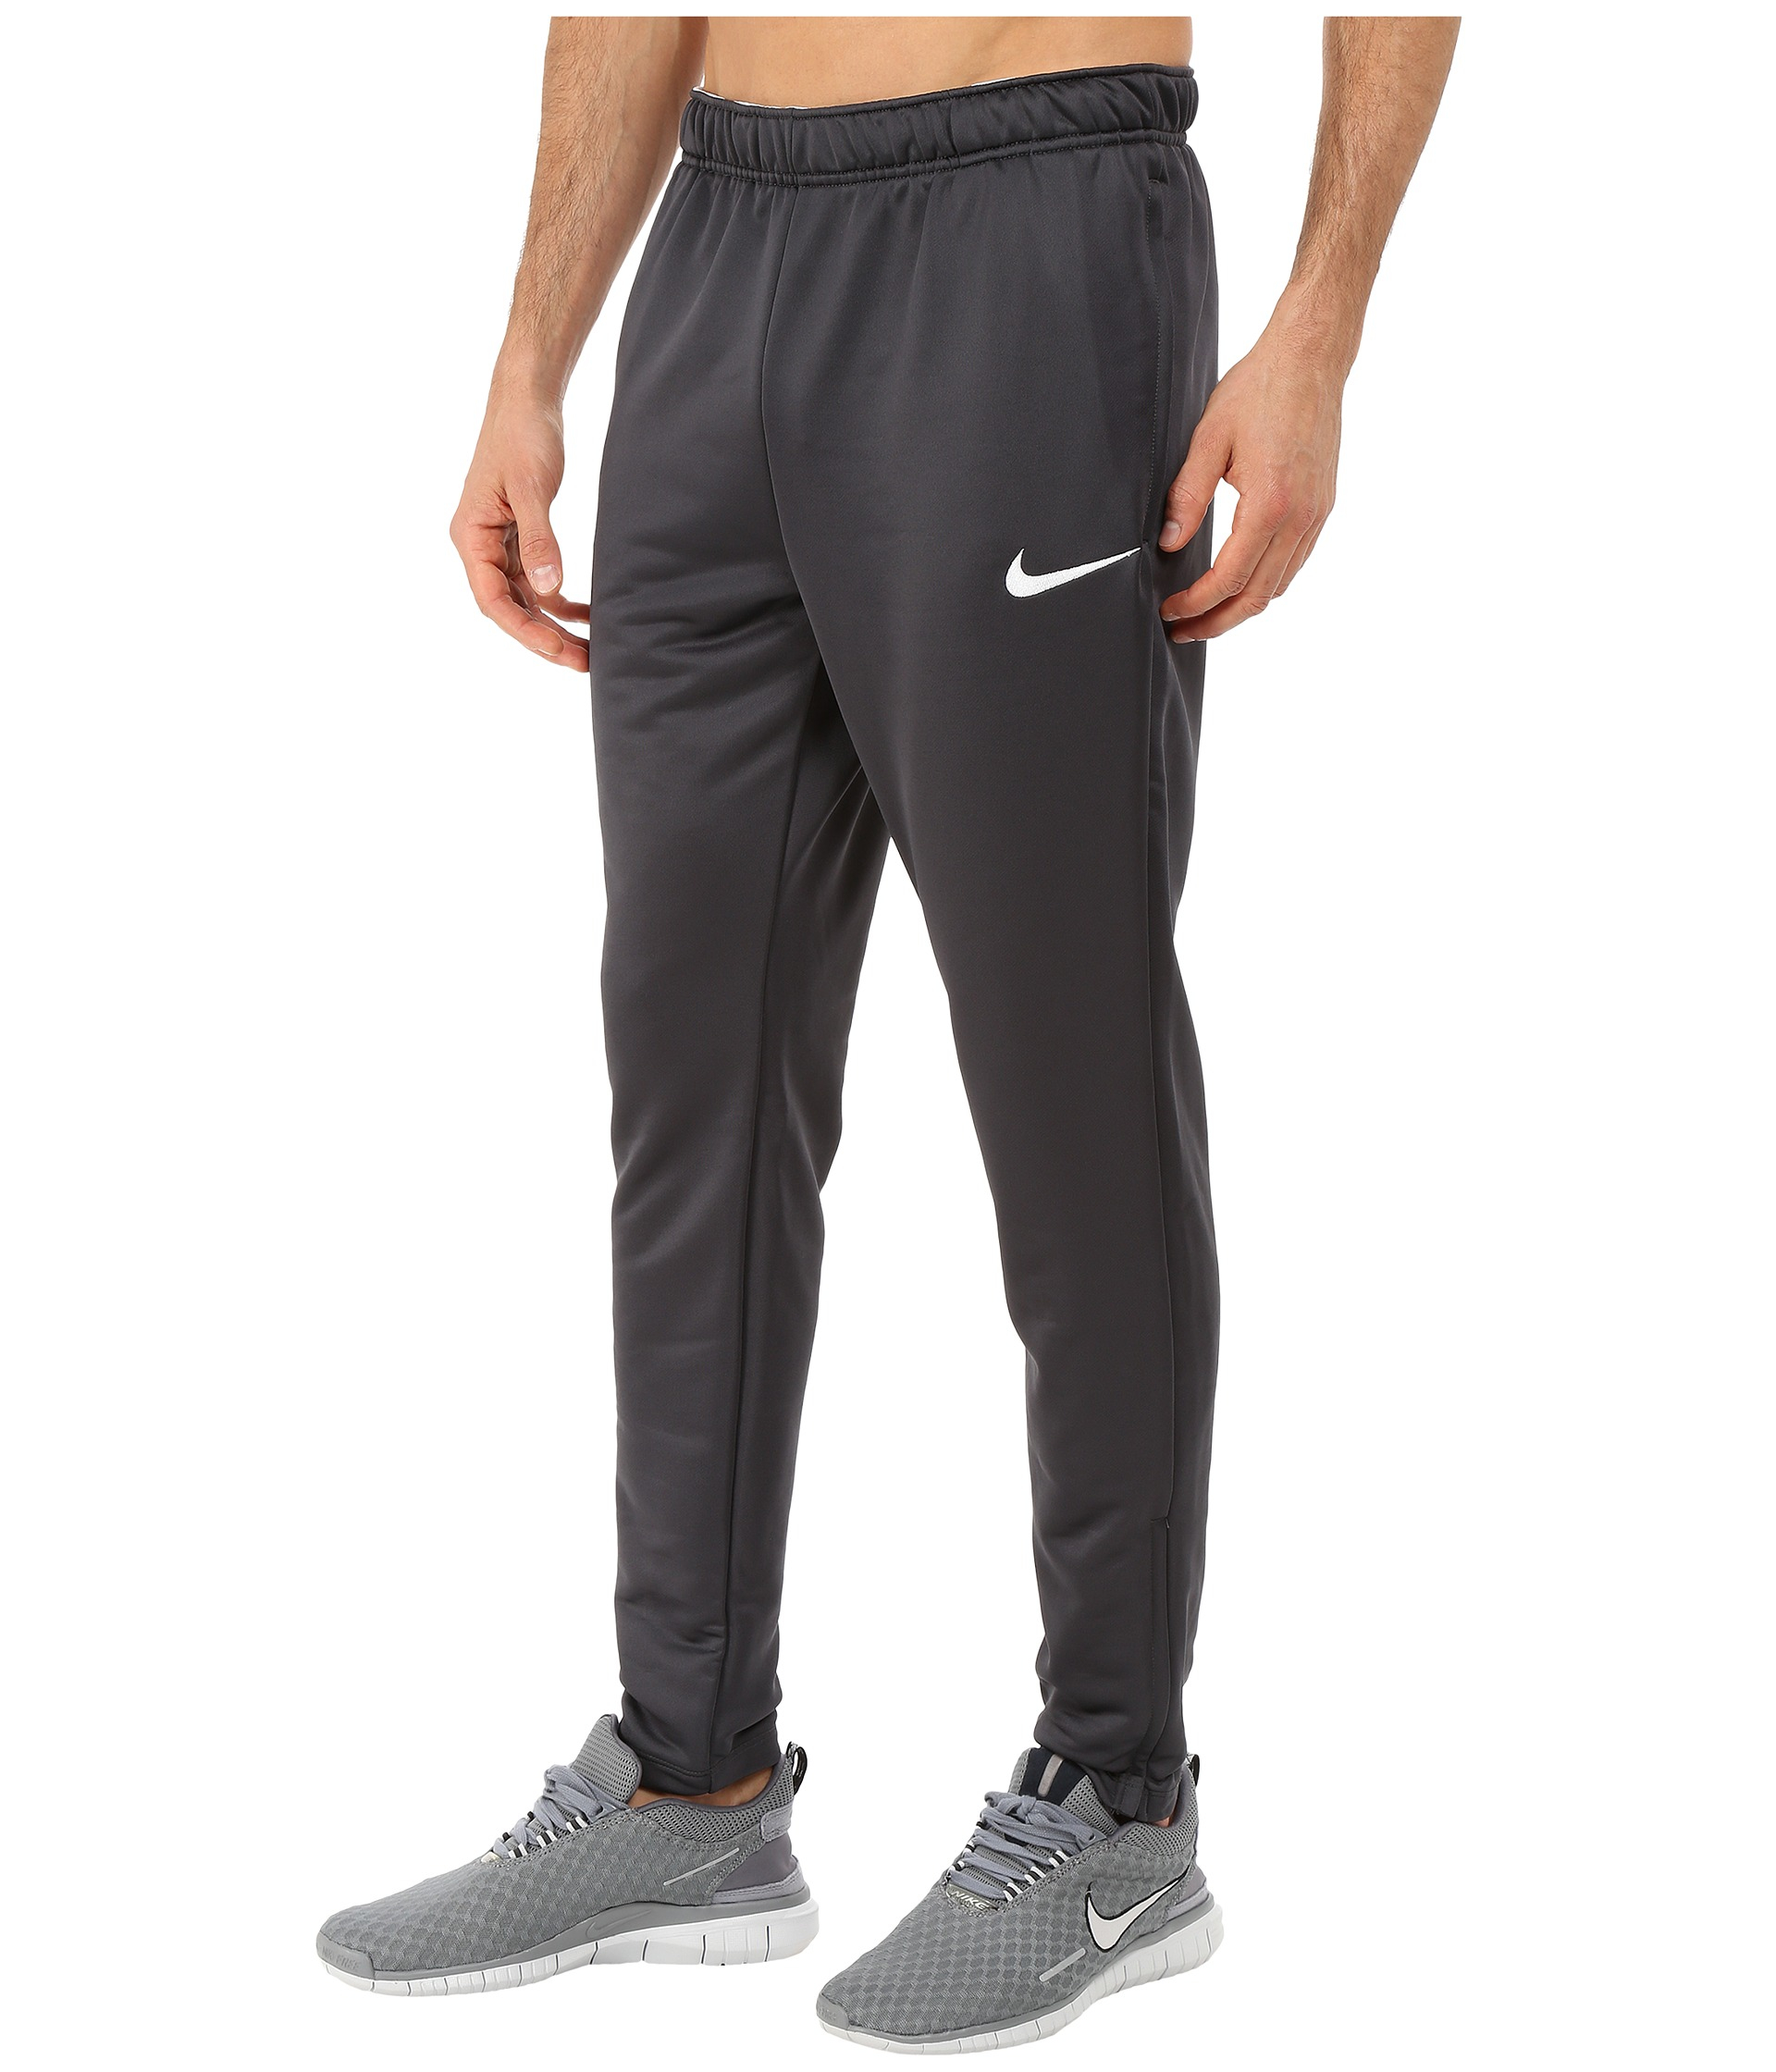 Lyst Nike Academy Tech Pants in Gray for Men